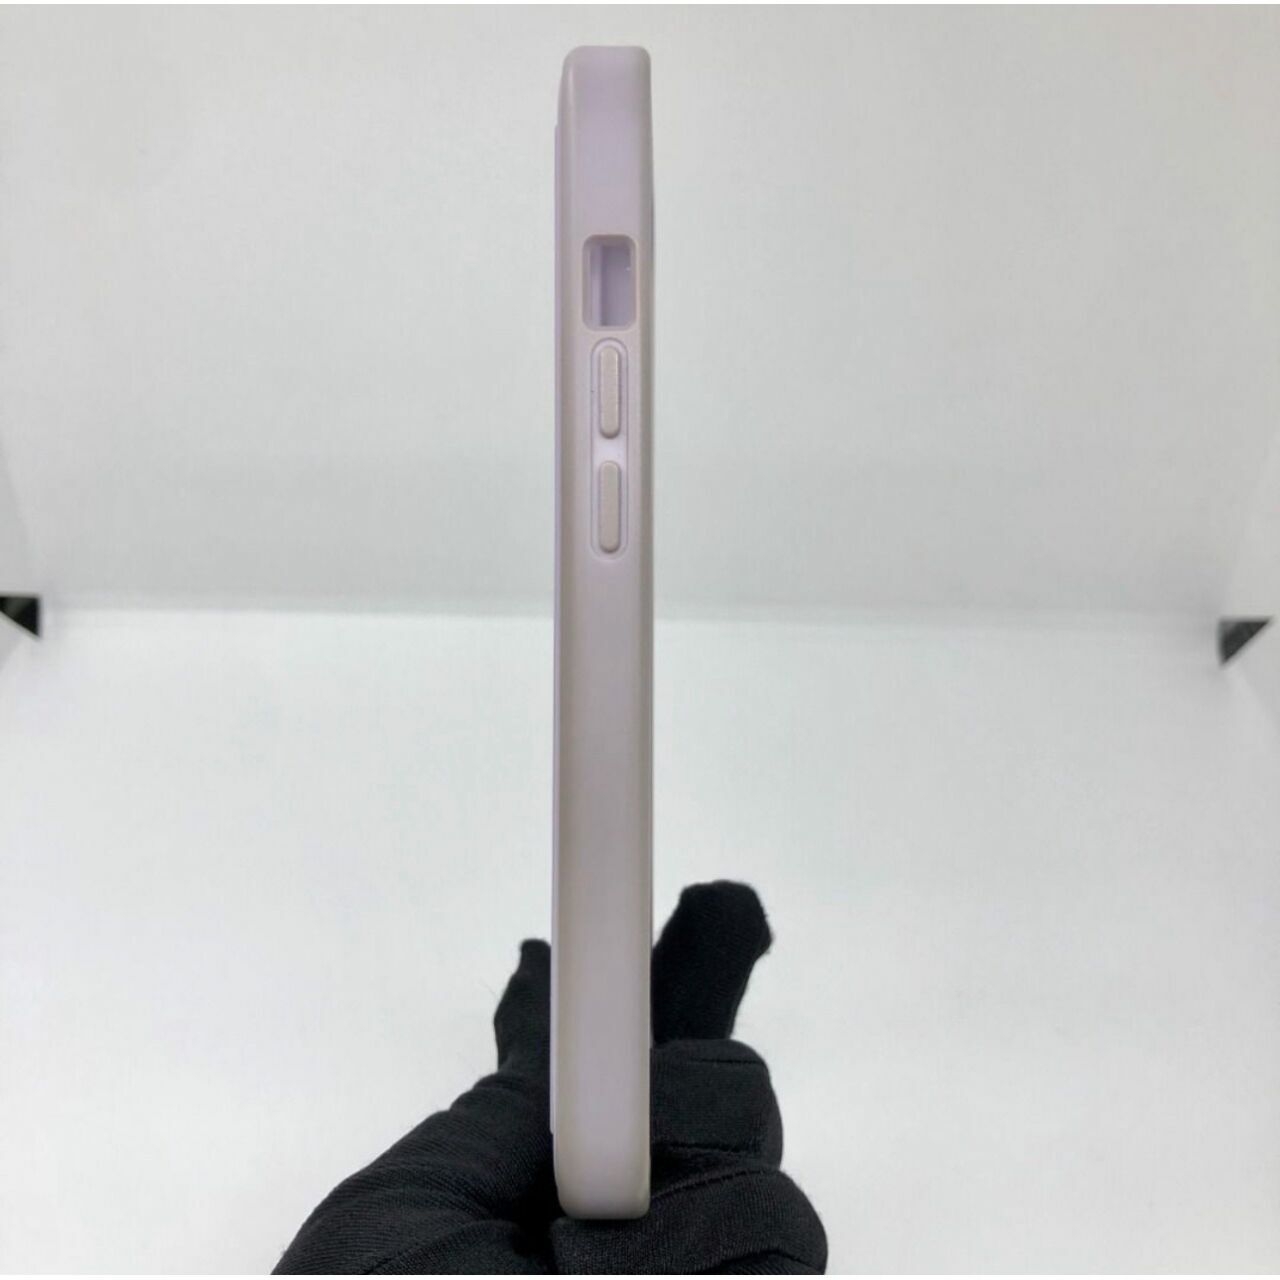 Rimowa Purple Iphone 13 Pro Phone Case